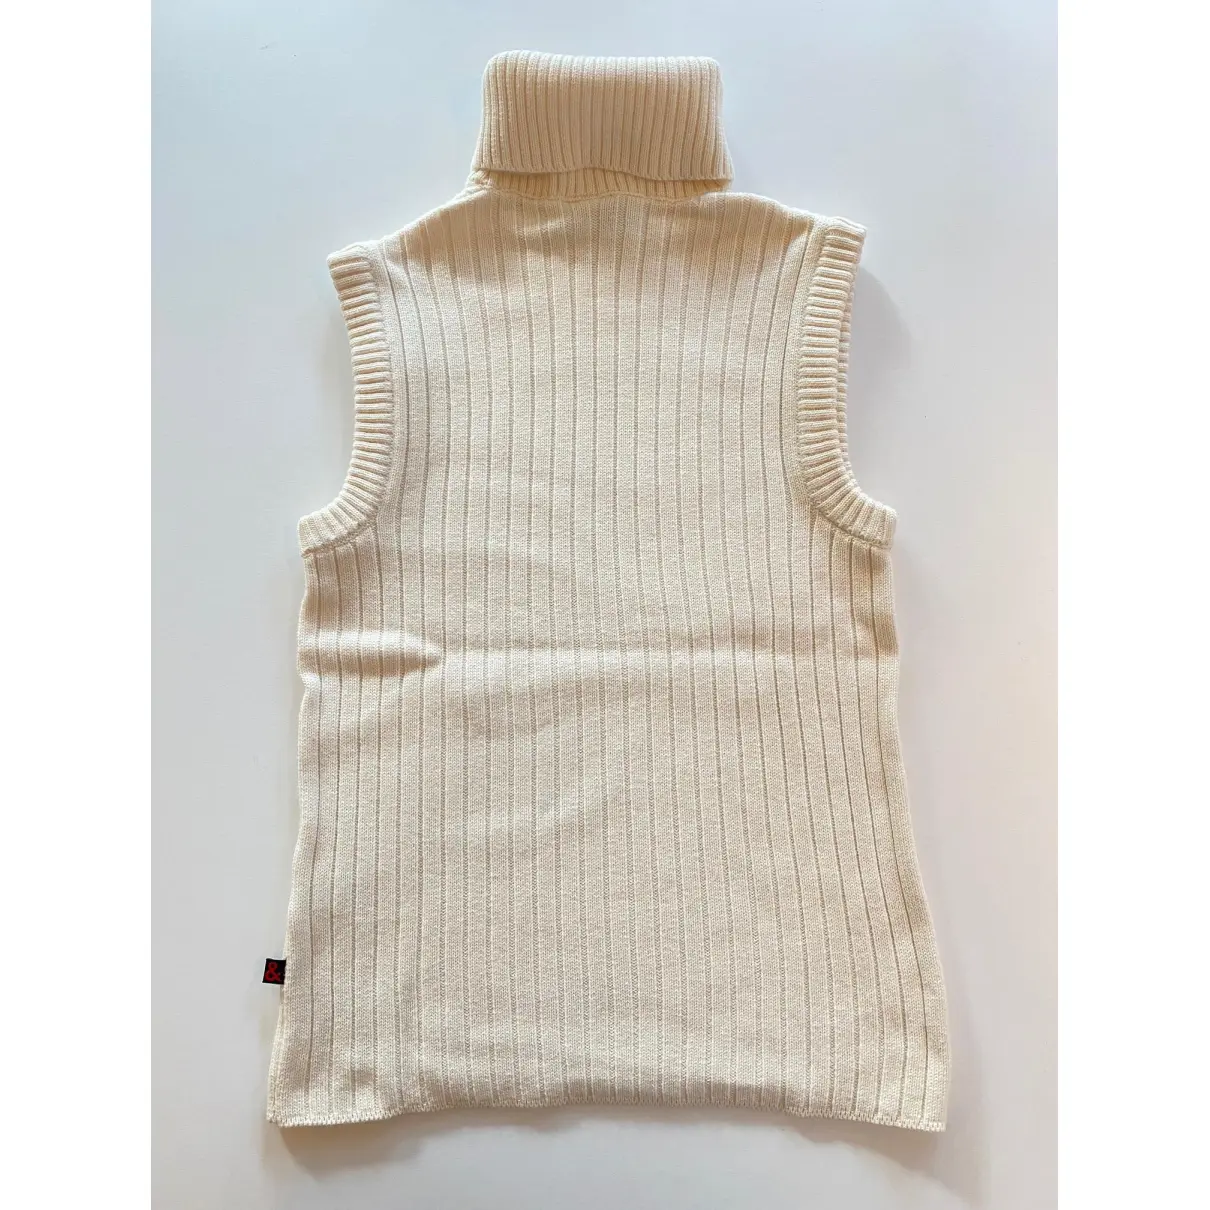 Buy D&G Wool jumper online - Vintage